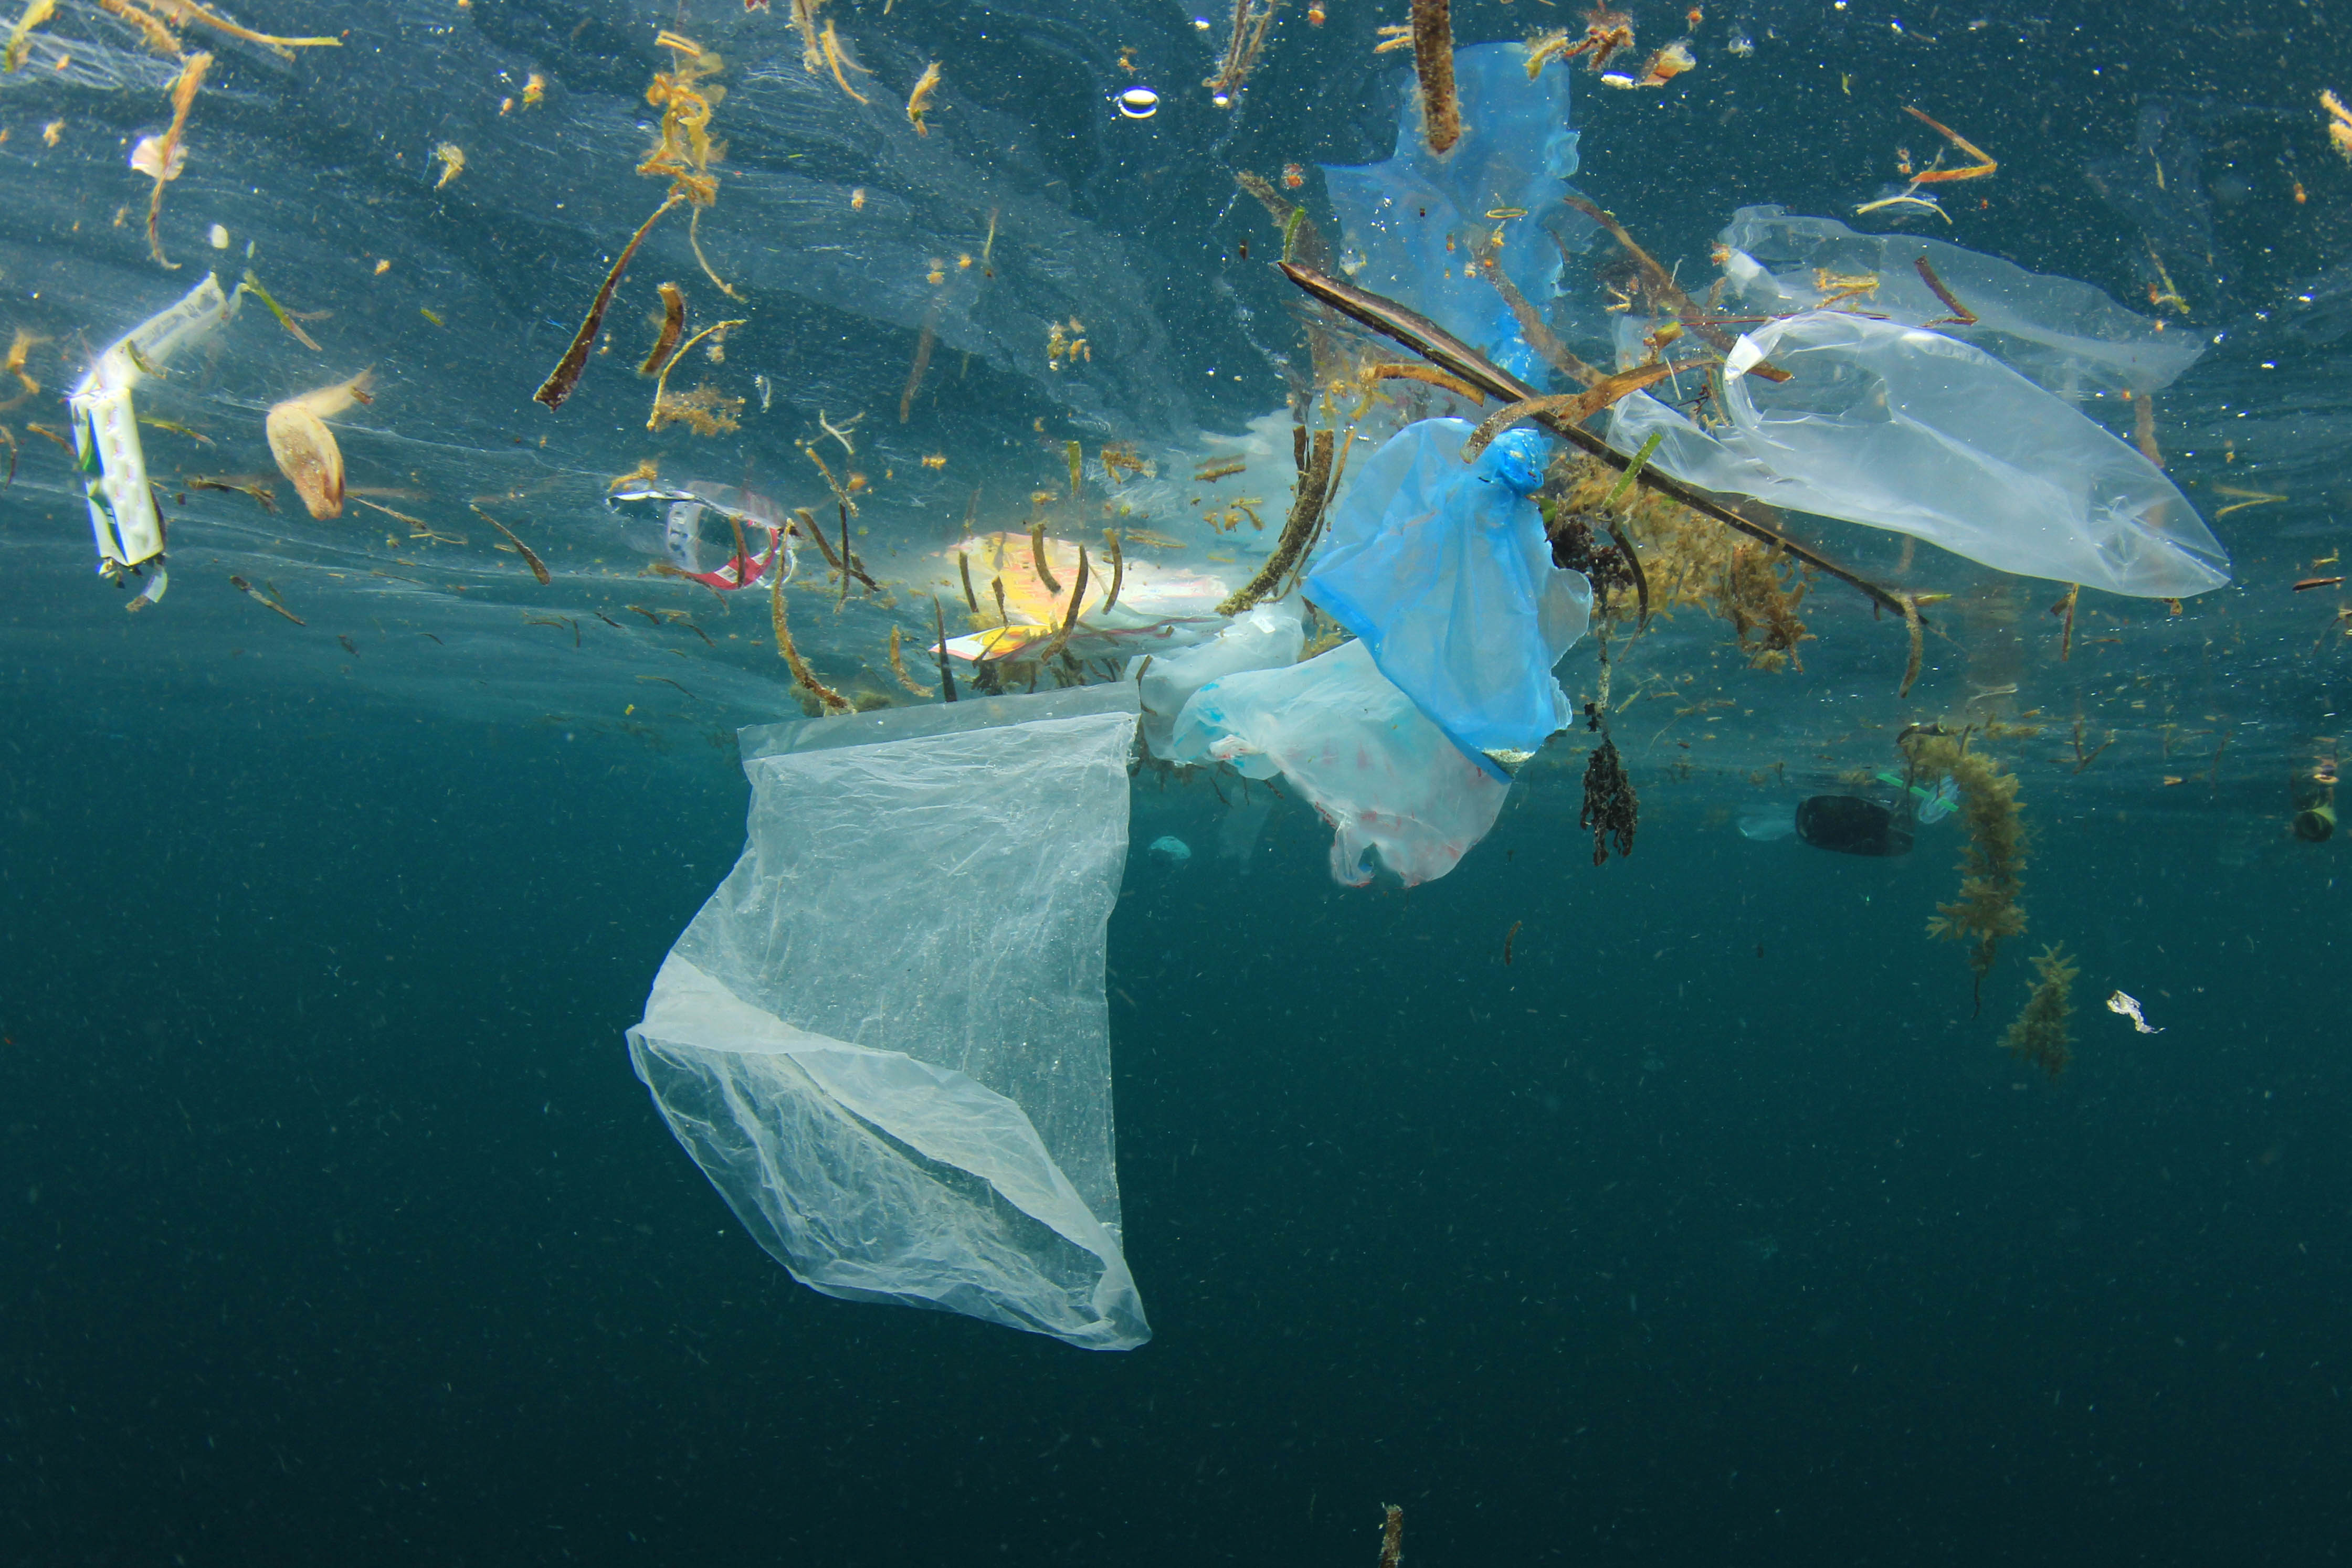 Plastic ocean pollution - plastic bag and rubbish floating in ocean.